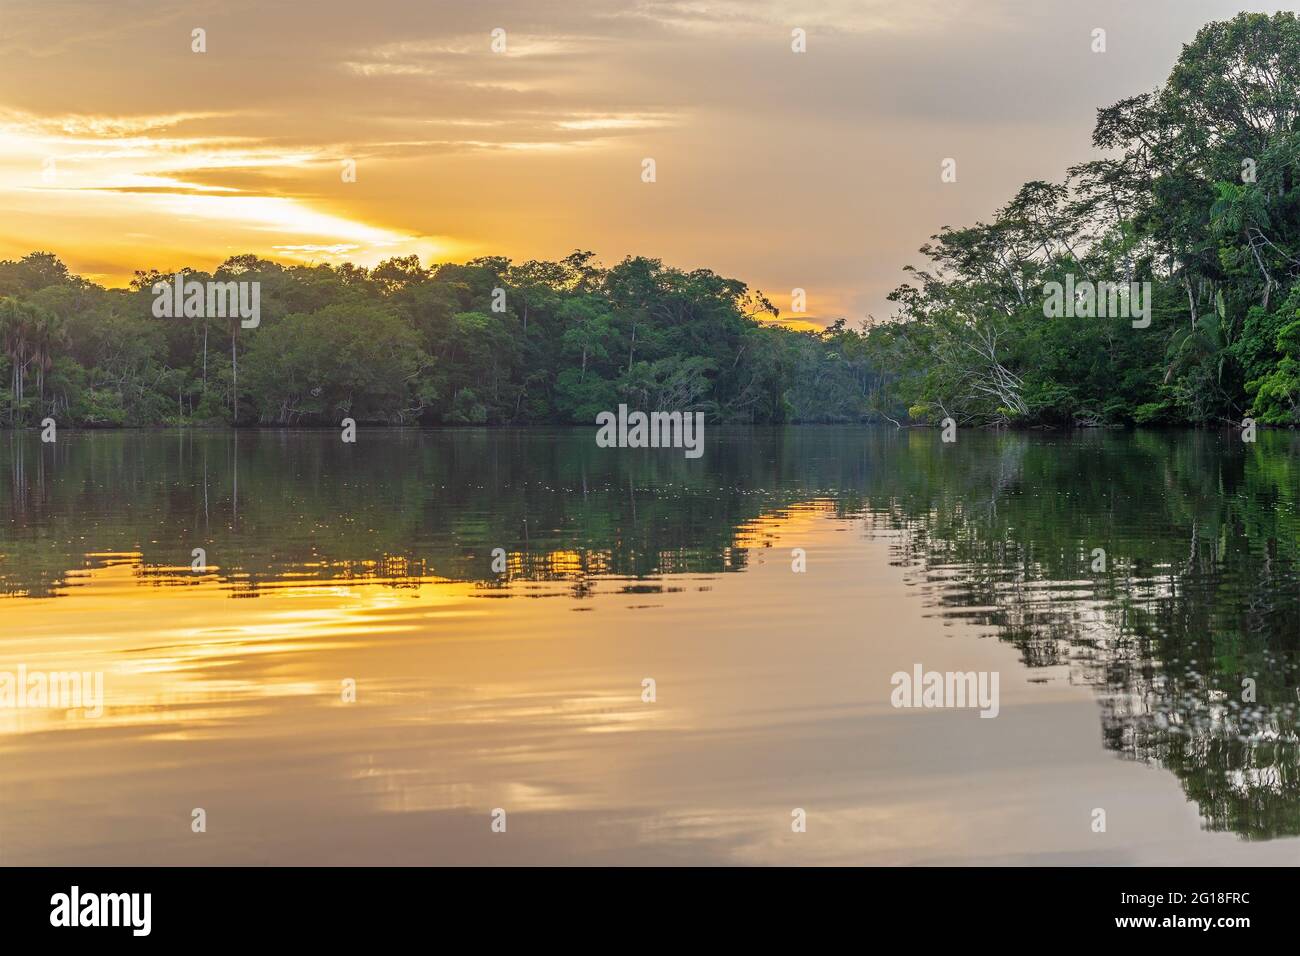 Amazon Rainforest lagoon sunset, generic landscape found in Brazil, Bolivia, Colombia, Ecuador, French Guyana, Suriname, Peru, Venezuela. Stock Photo